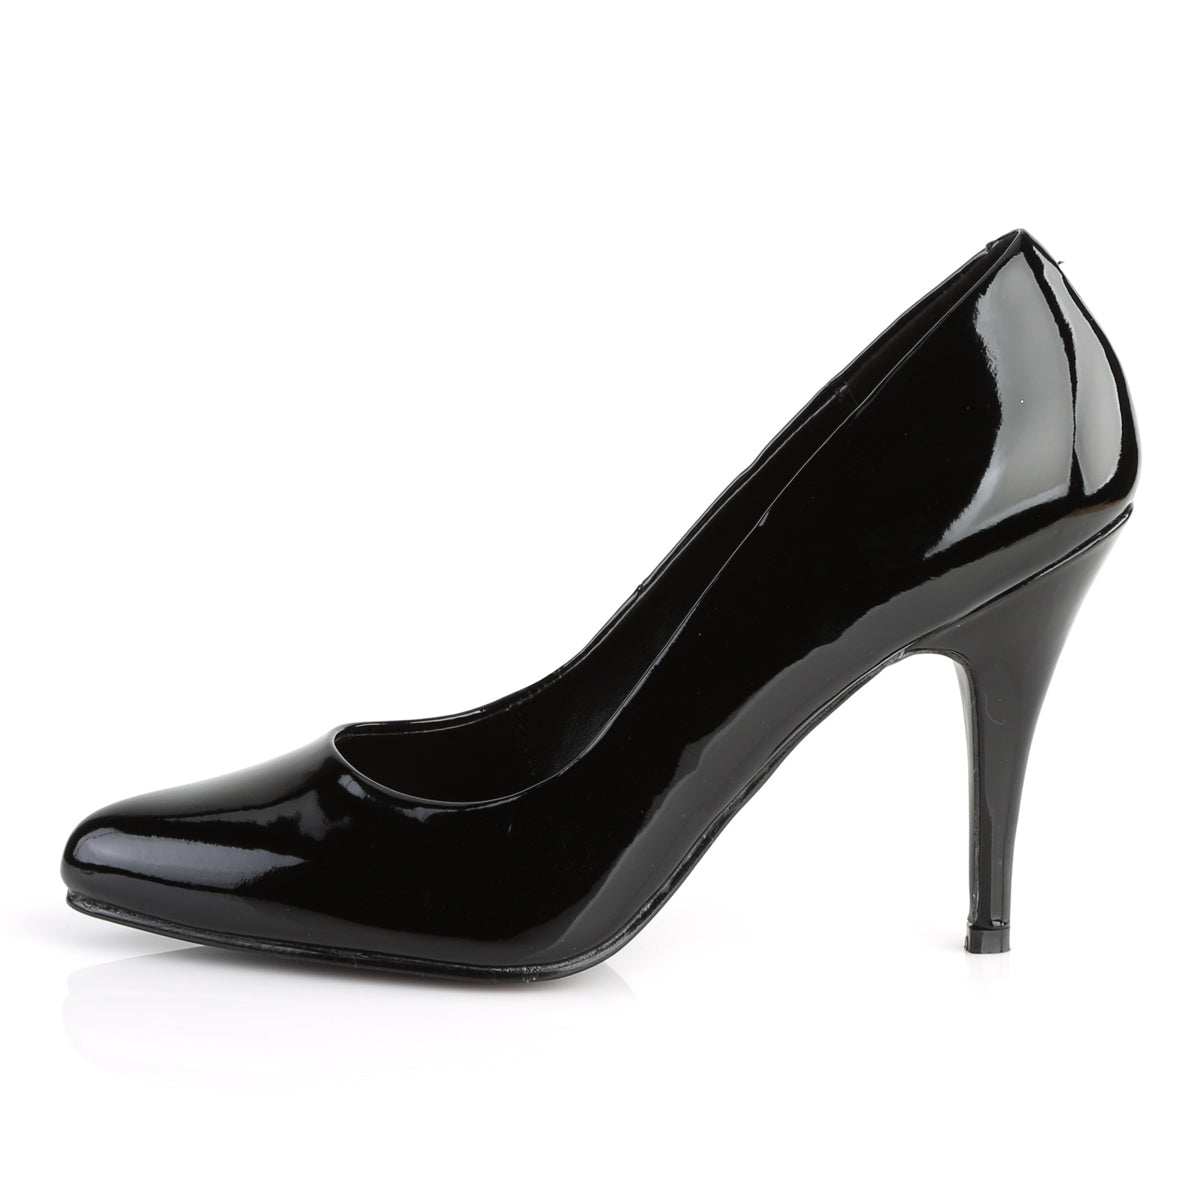 VANITY-420 Pleaser Shoe 4" Heel Black Patent Fetish Footwear-Pleaser- Sexy Shoes Pole Dance Heels